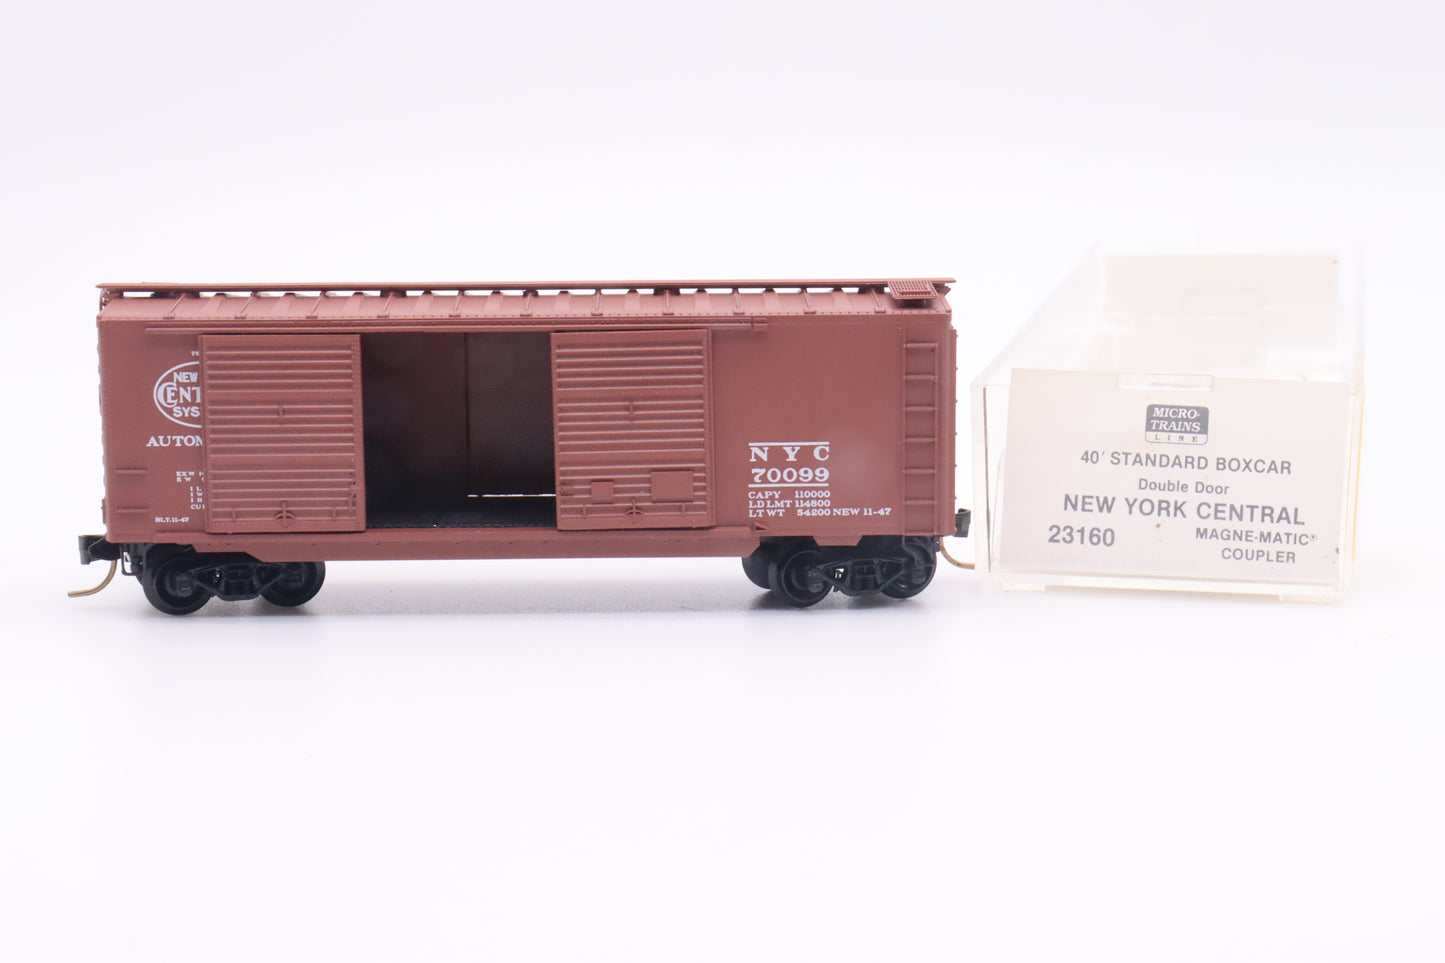 MTL-23160 - 40' Standard Box Car, Double Door - New York Central - NYC-70099